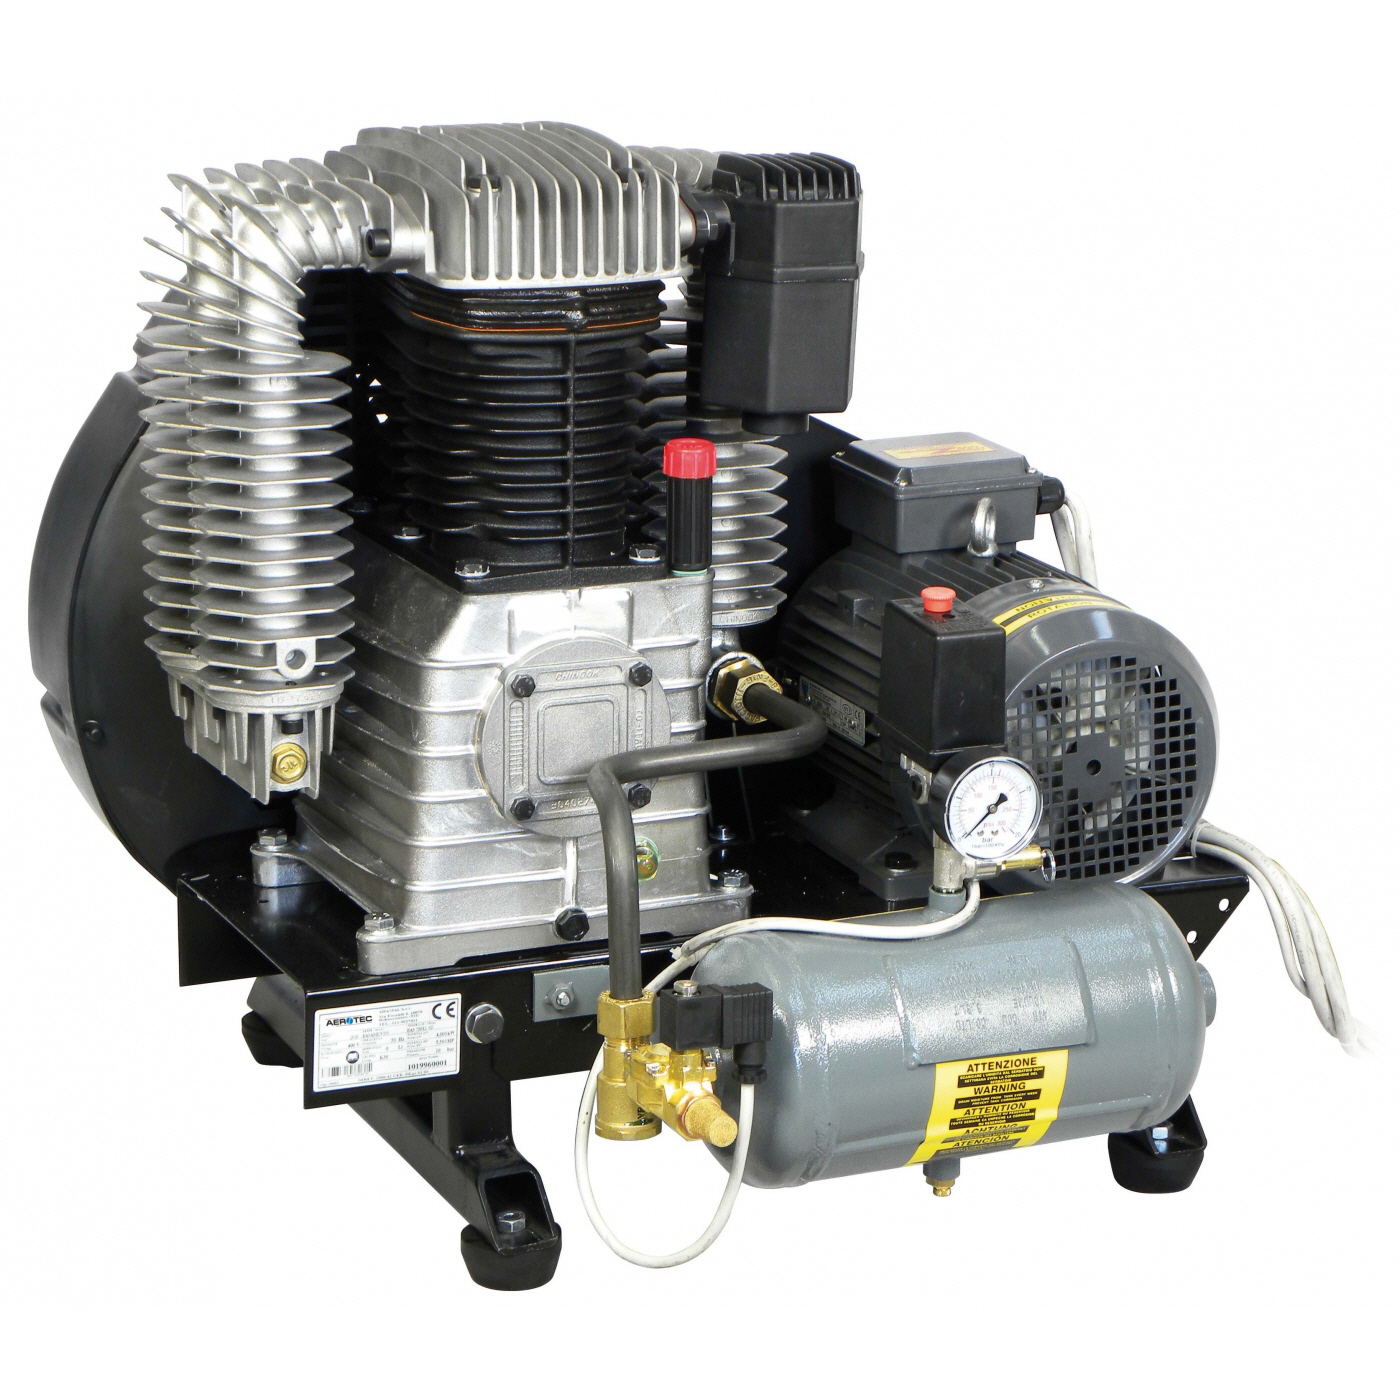 AEROTEC Kolbenkompressor Basis AK50 - 7,4KW inkl. Stern Dreieecksschalter Beistellaggregate